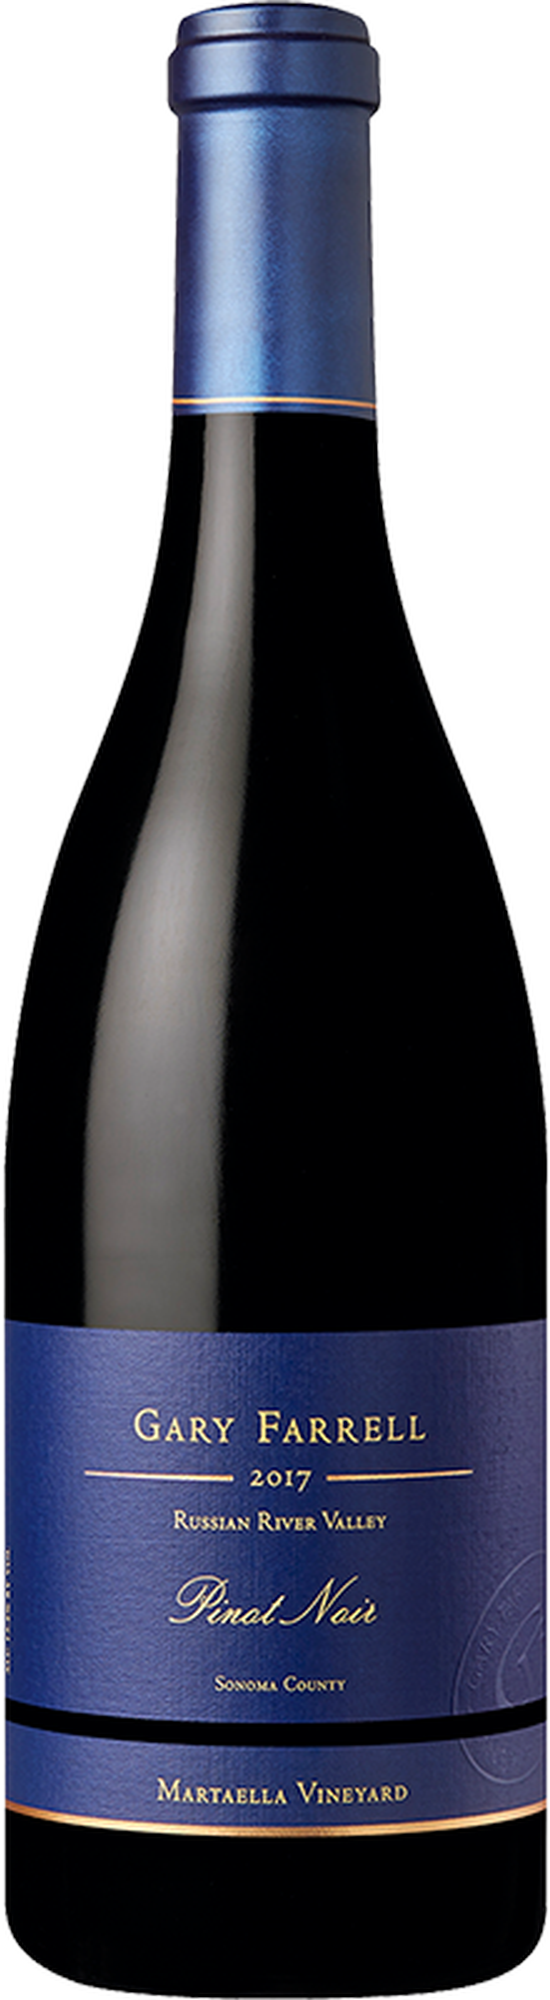 2017 Martaella Vineyard Pinot Noir